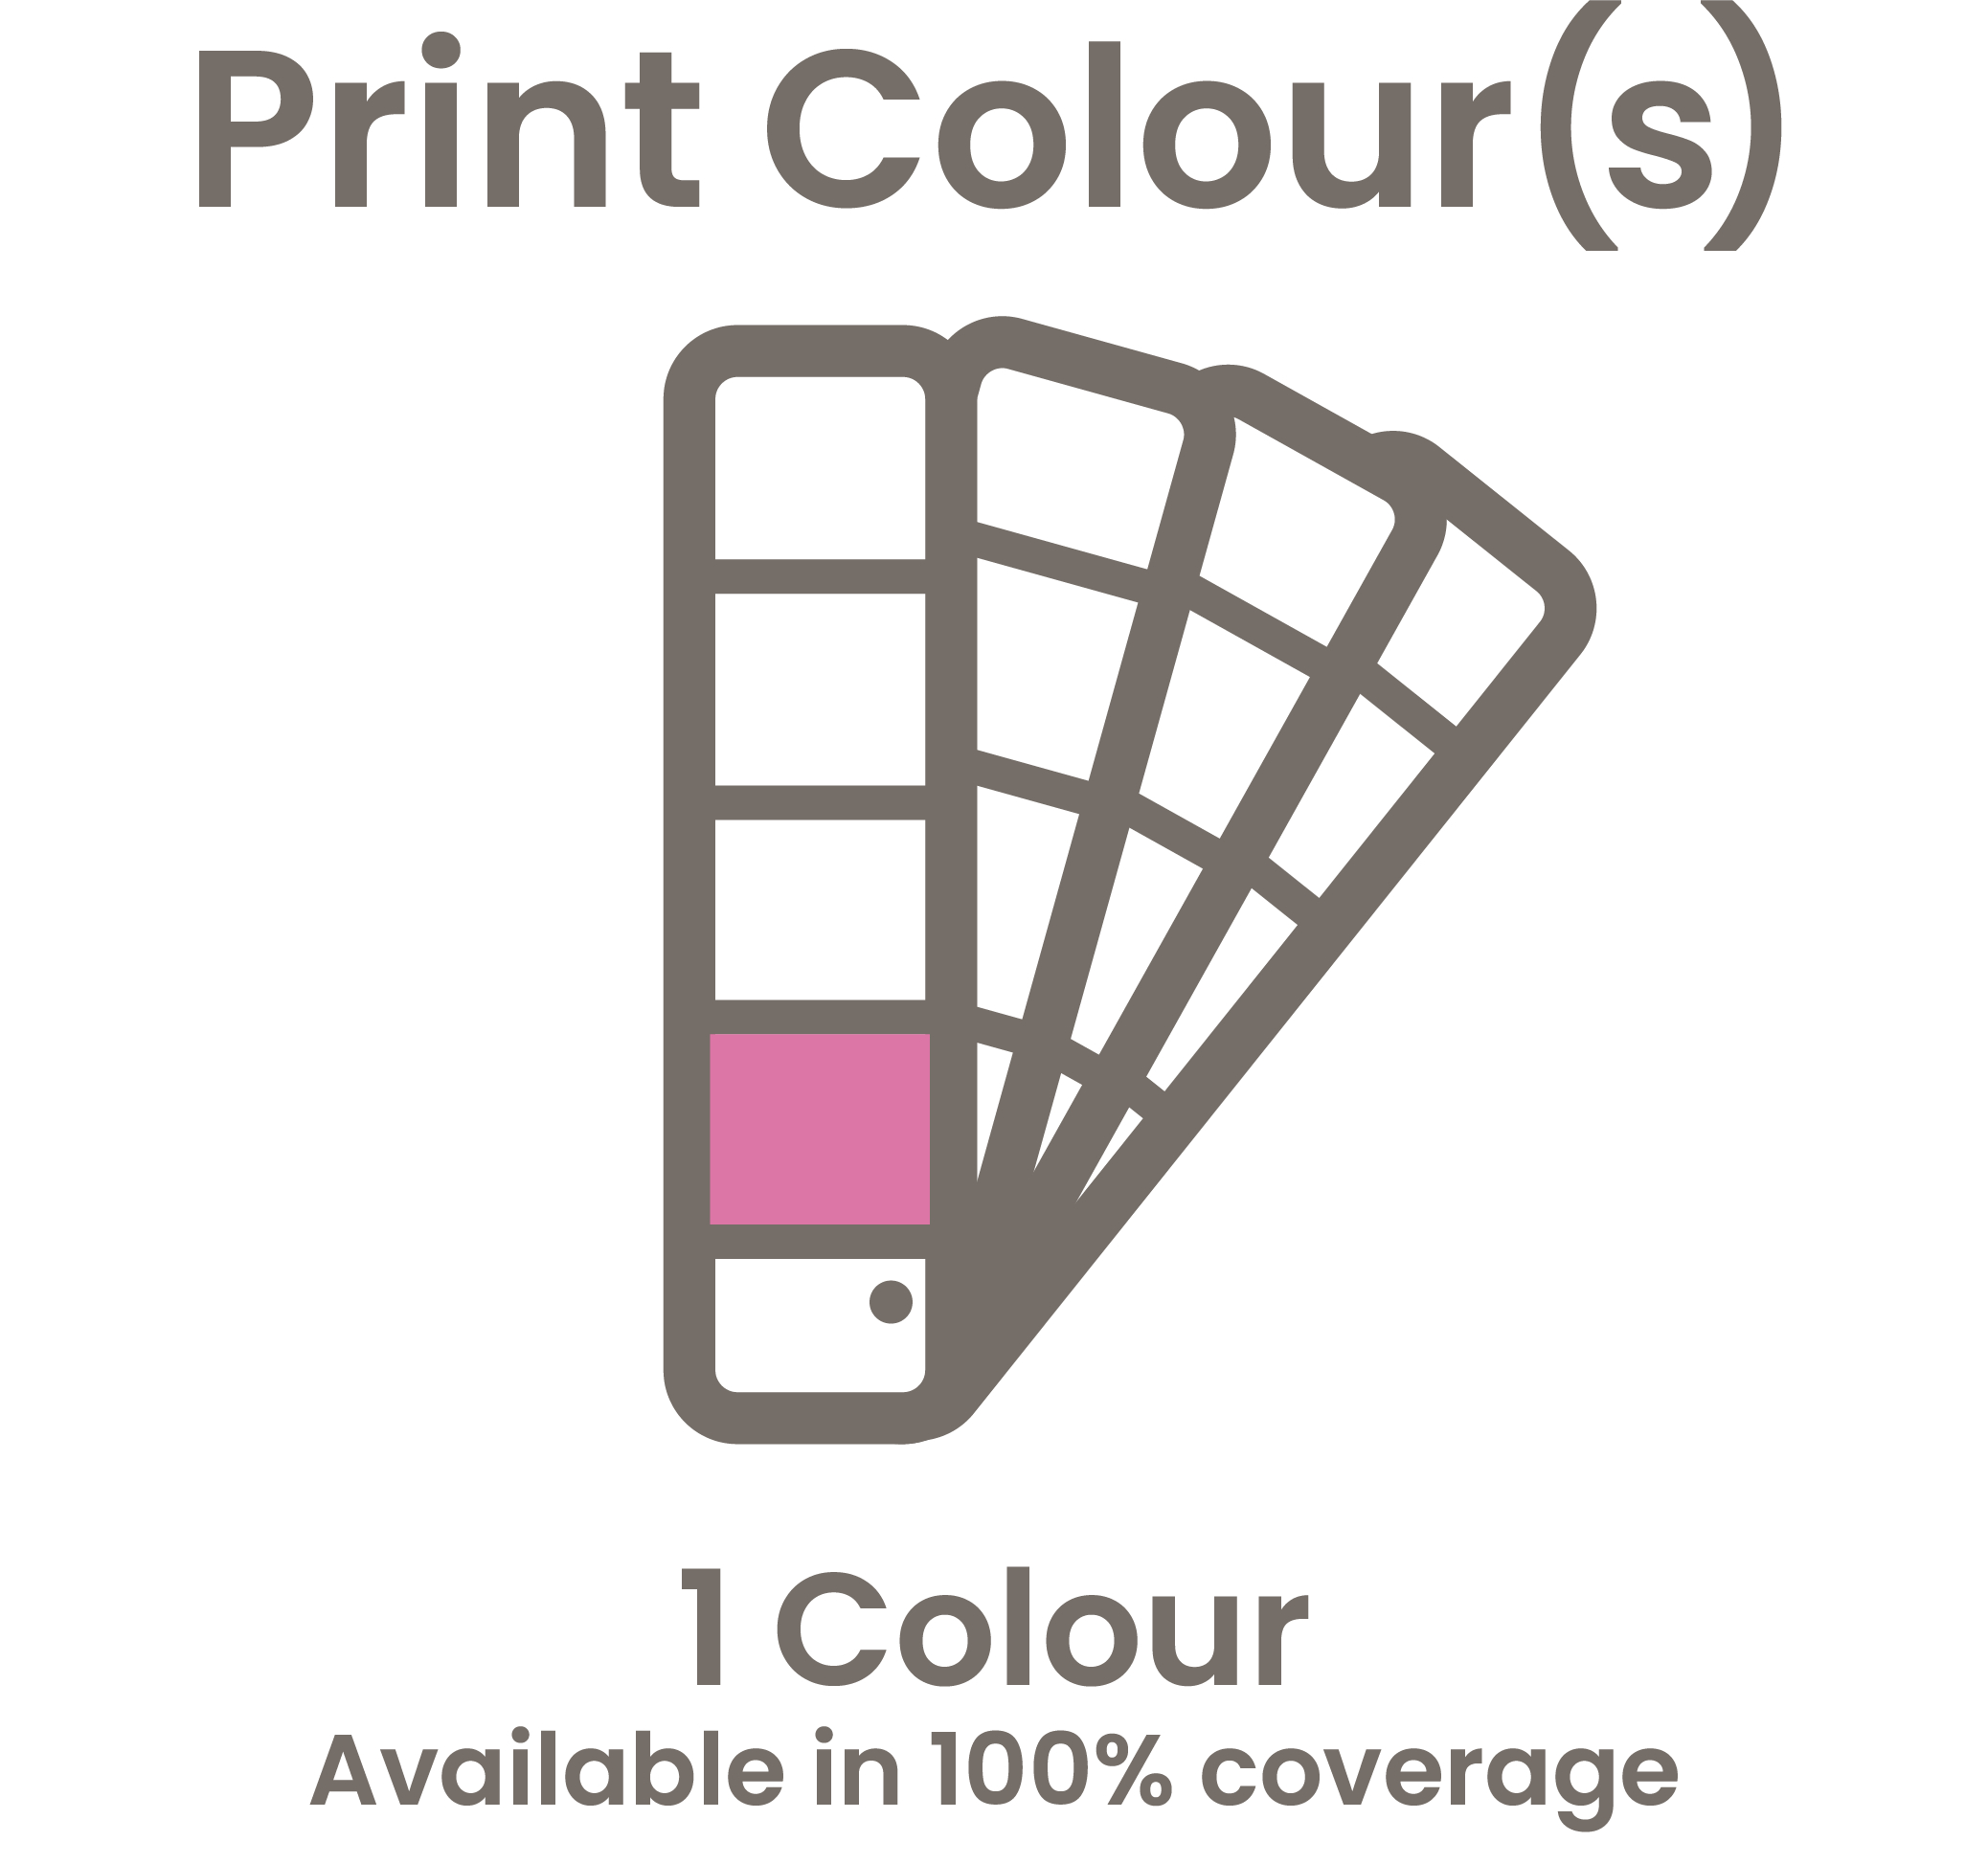 Print Colour